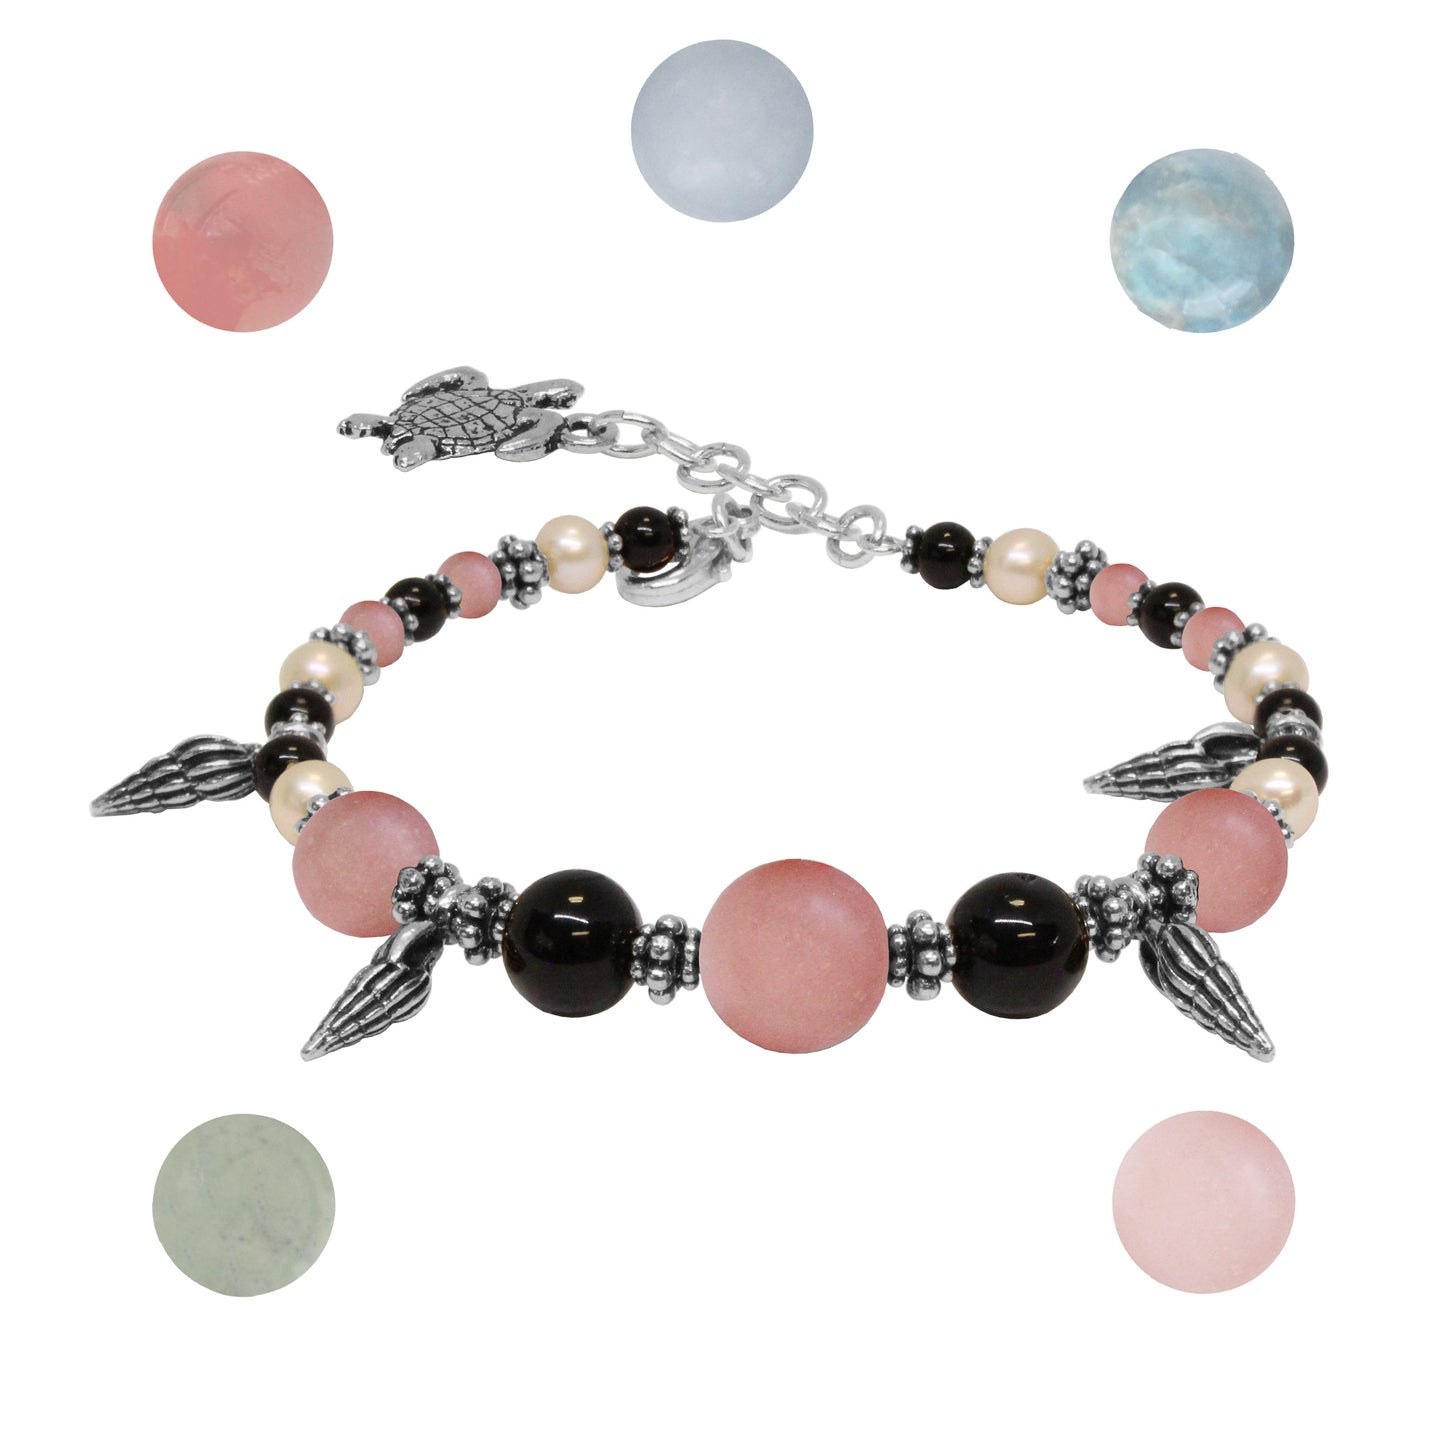 Turtle Beach Bracelet / 6 - 7.5 Inch wrist size / silver pewter / choose from apatite, angelite, carnelian, serpentine or pink opal